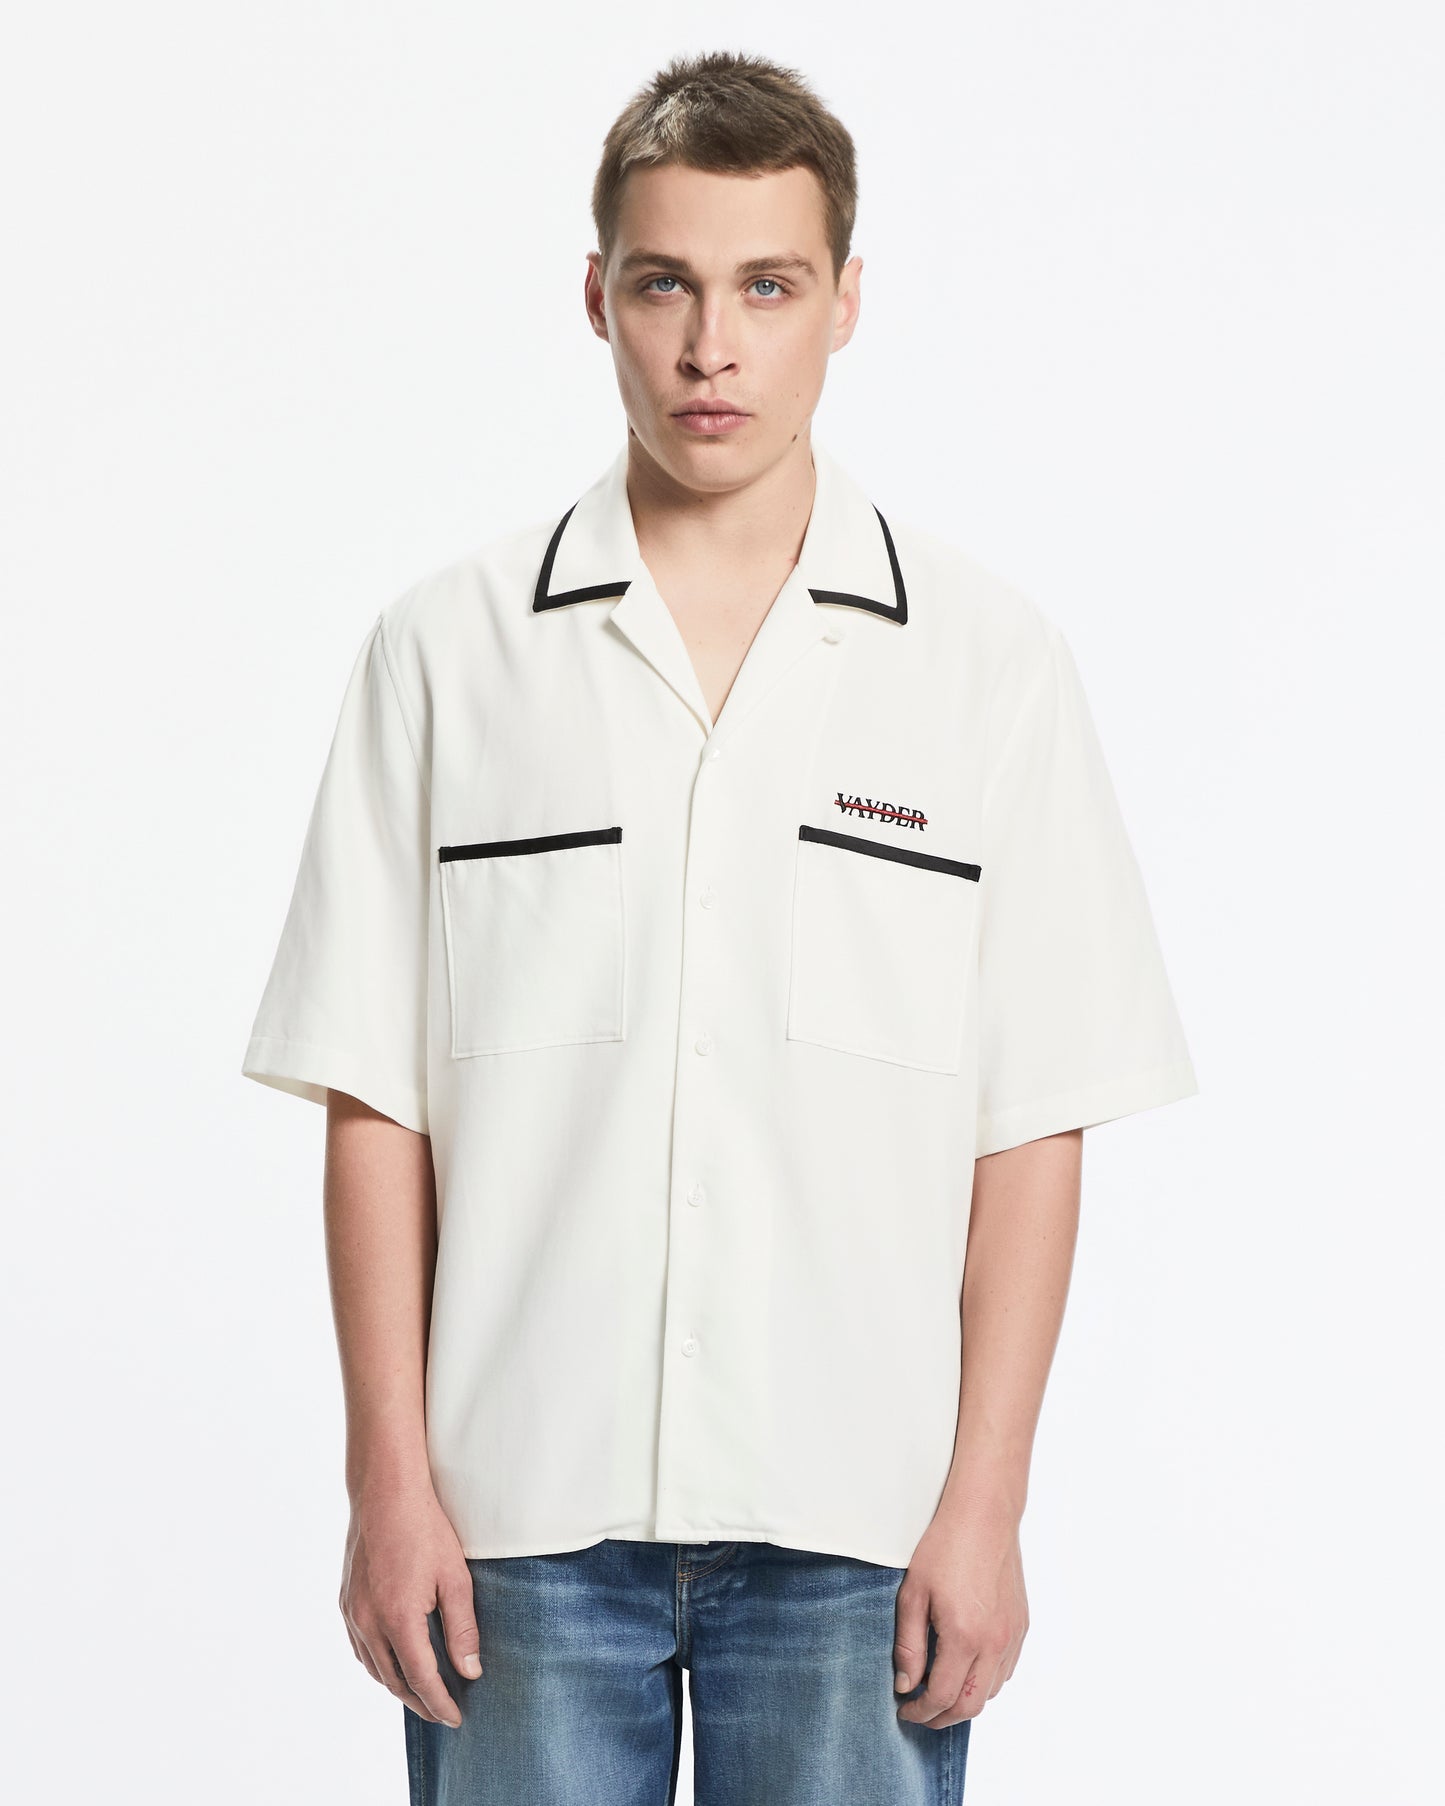 The Luca Shirt - White